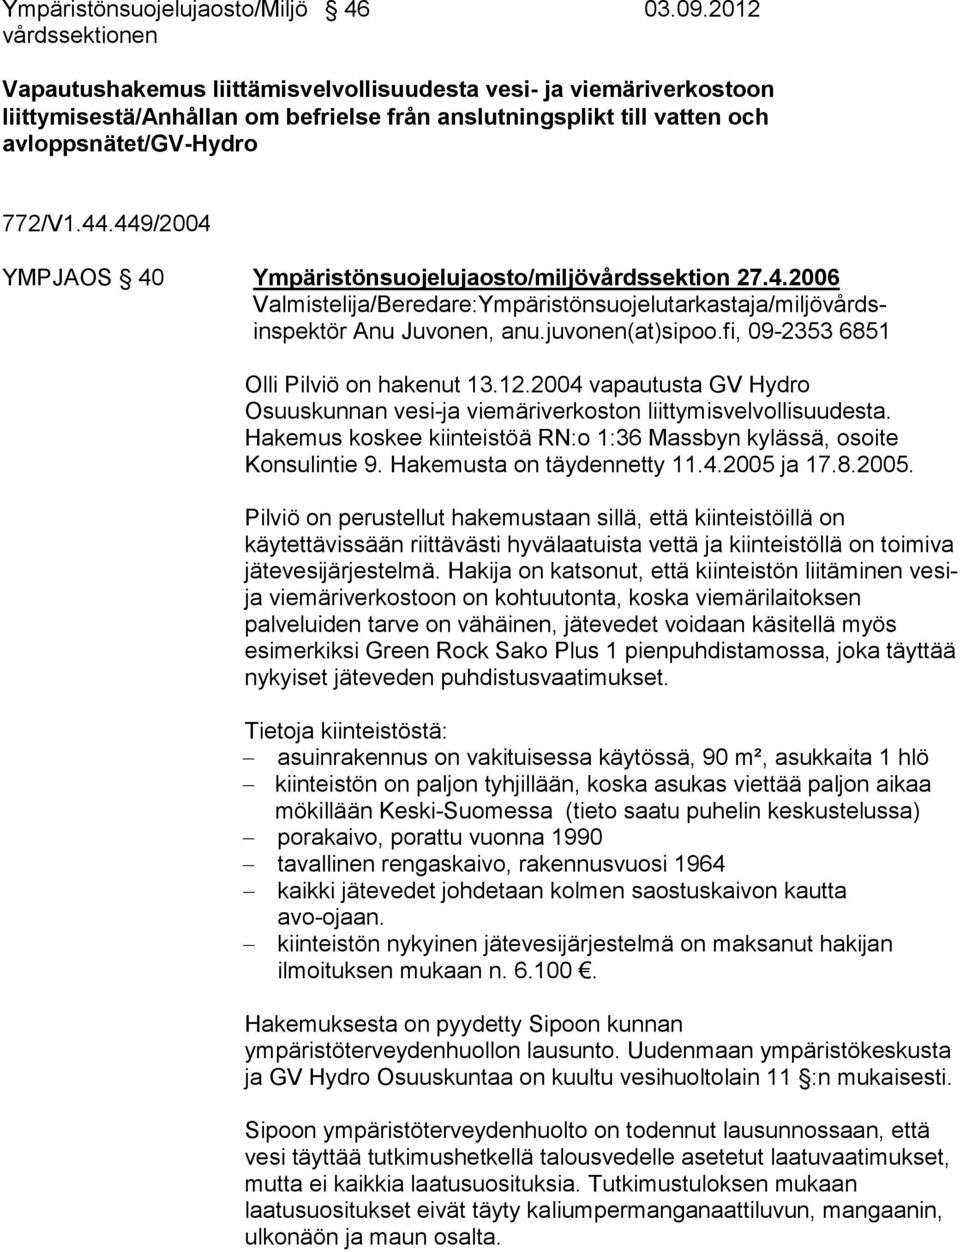 449/2004 YMPJAOS 40 Ympäristönsuojelujaosto/miljövårdssektion 27.4.2006 Valmistelija/Beredare:Ympäristönsuojelutarkastaja/miljövårdsinspektör Anu Juvonen, anu.juvonen(at)sipoo.